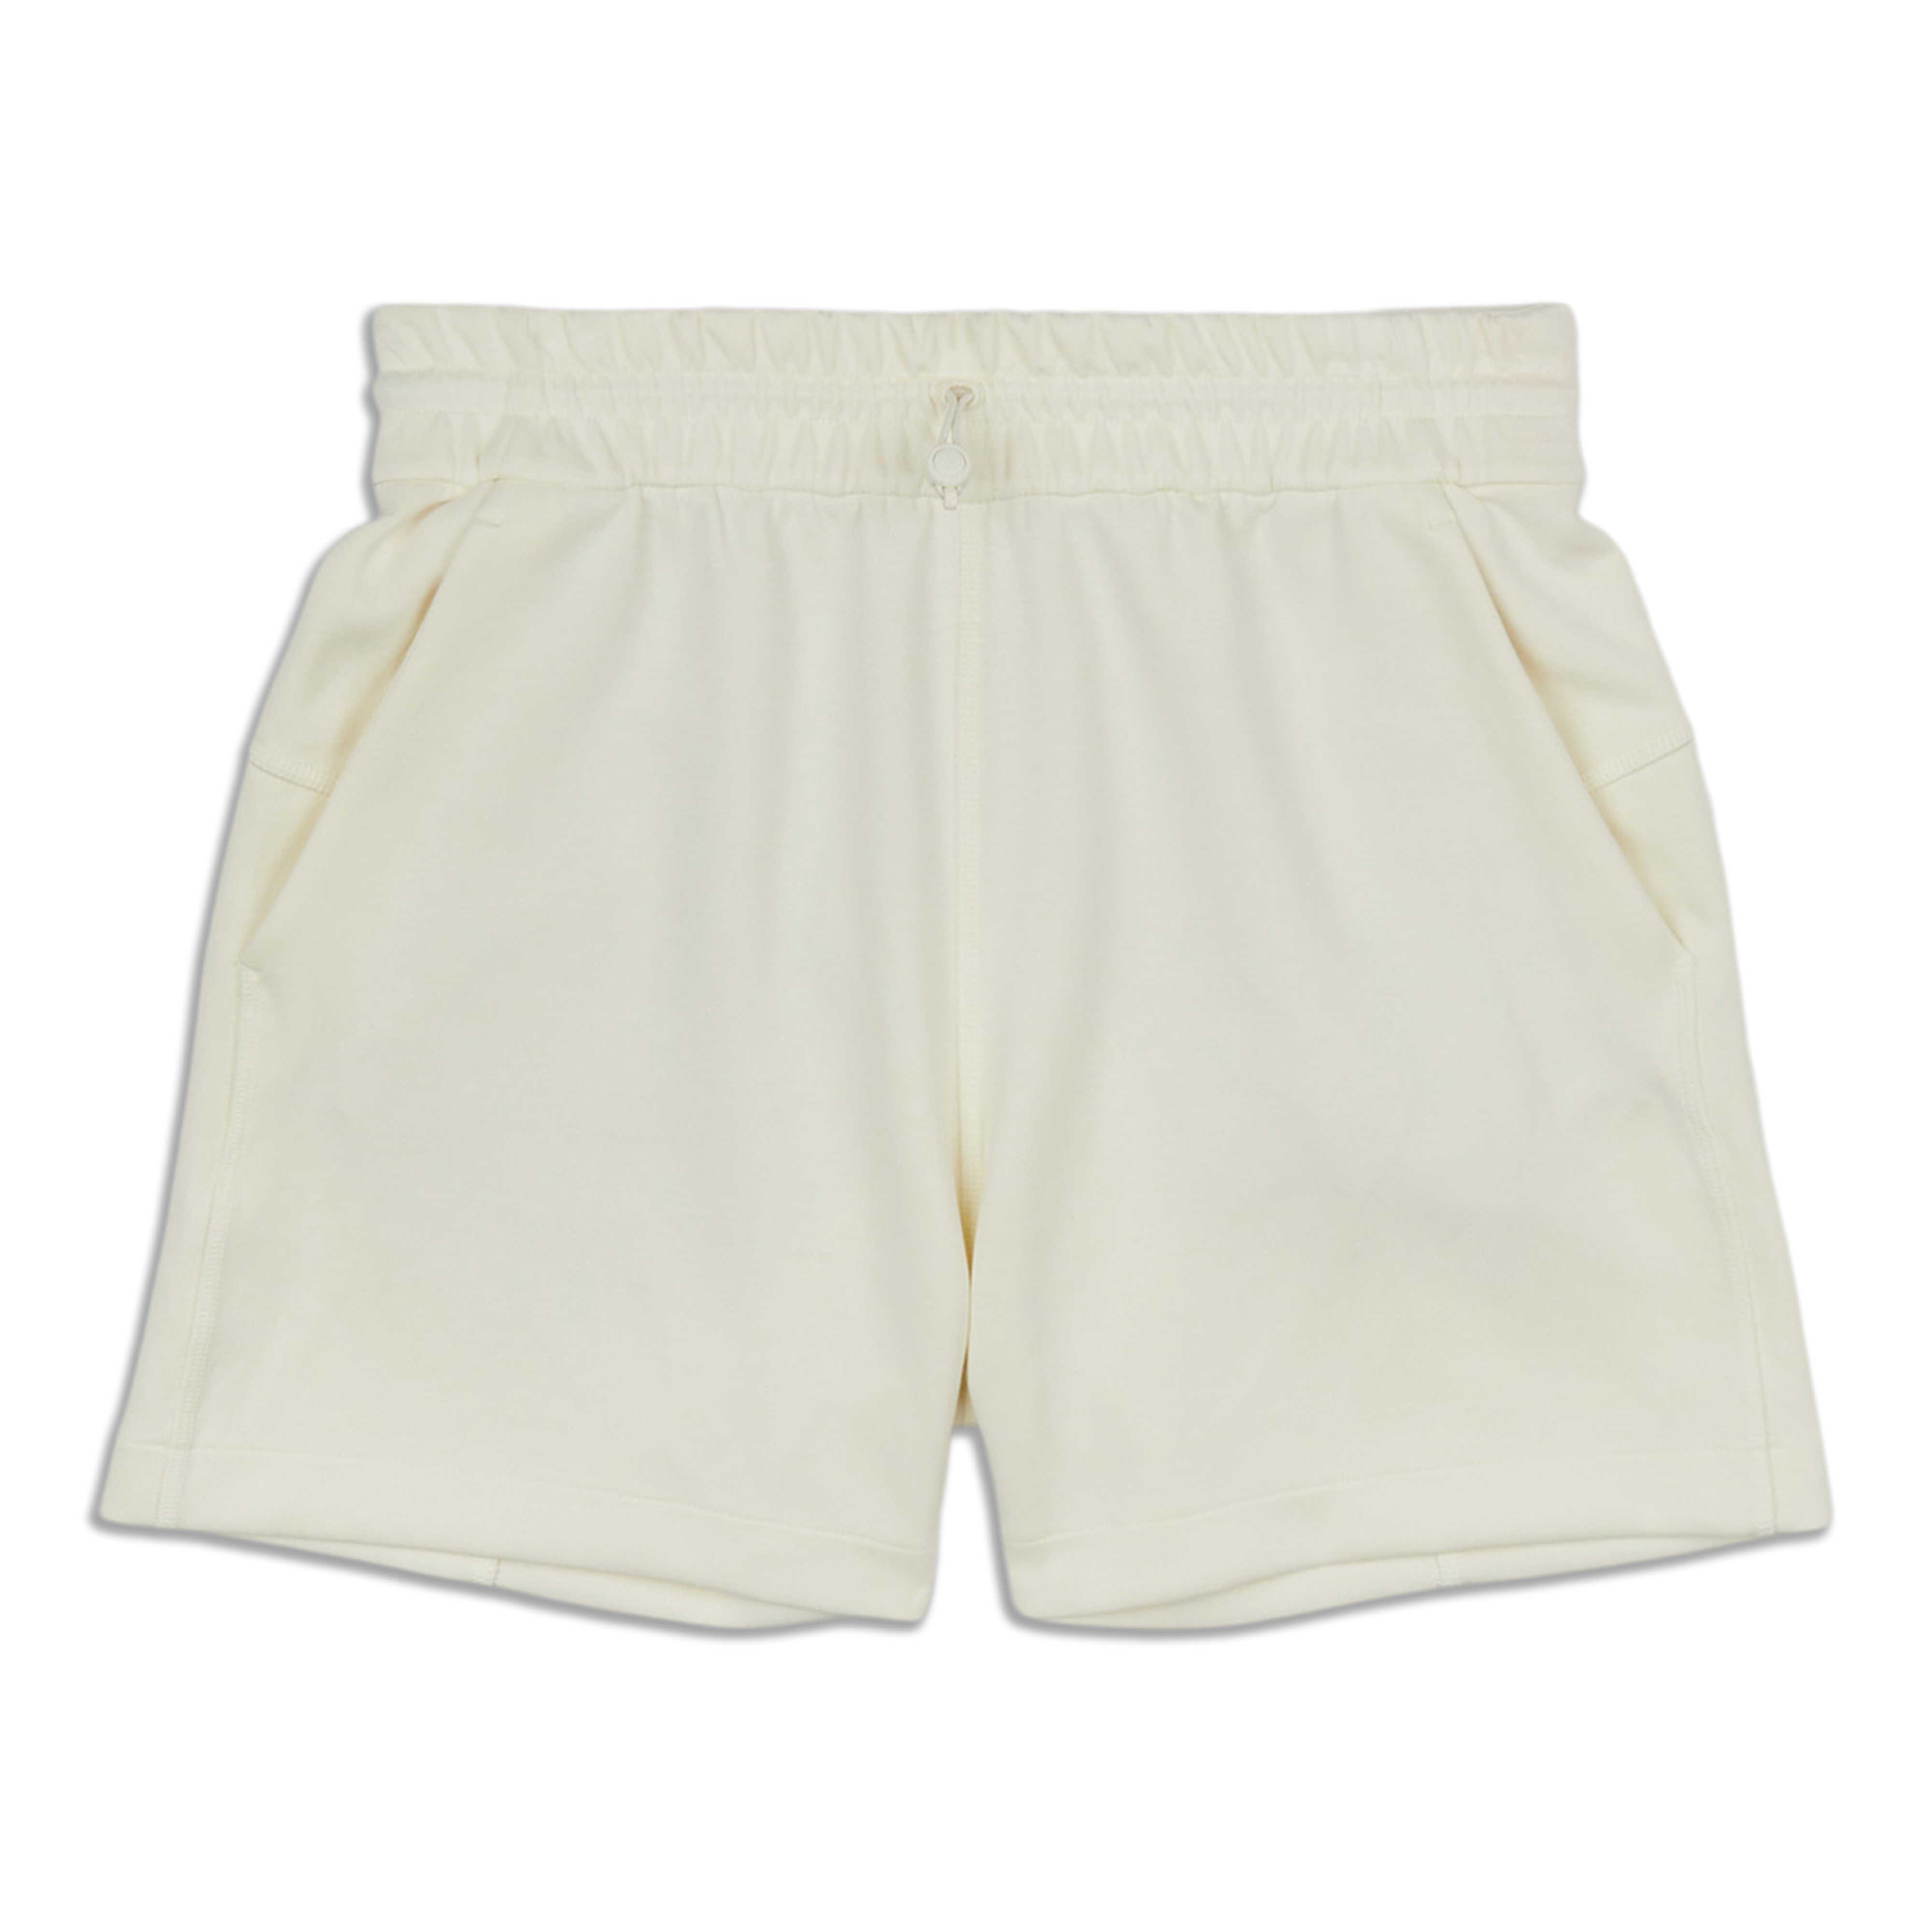 Affordable lululemon softstreme shorts For Sale